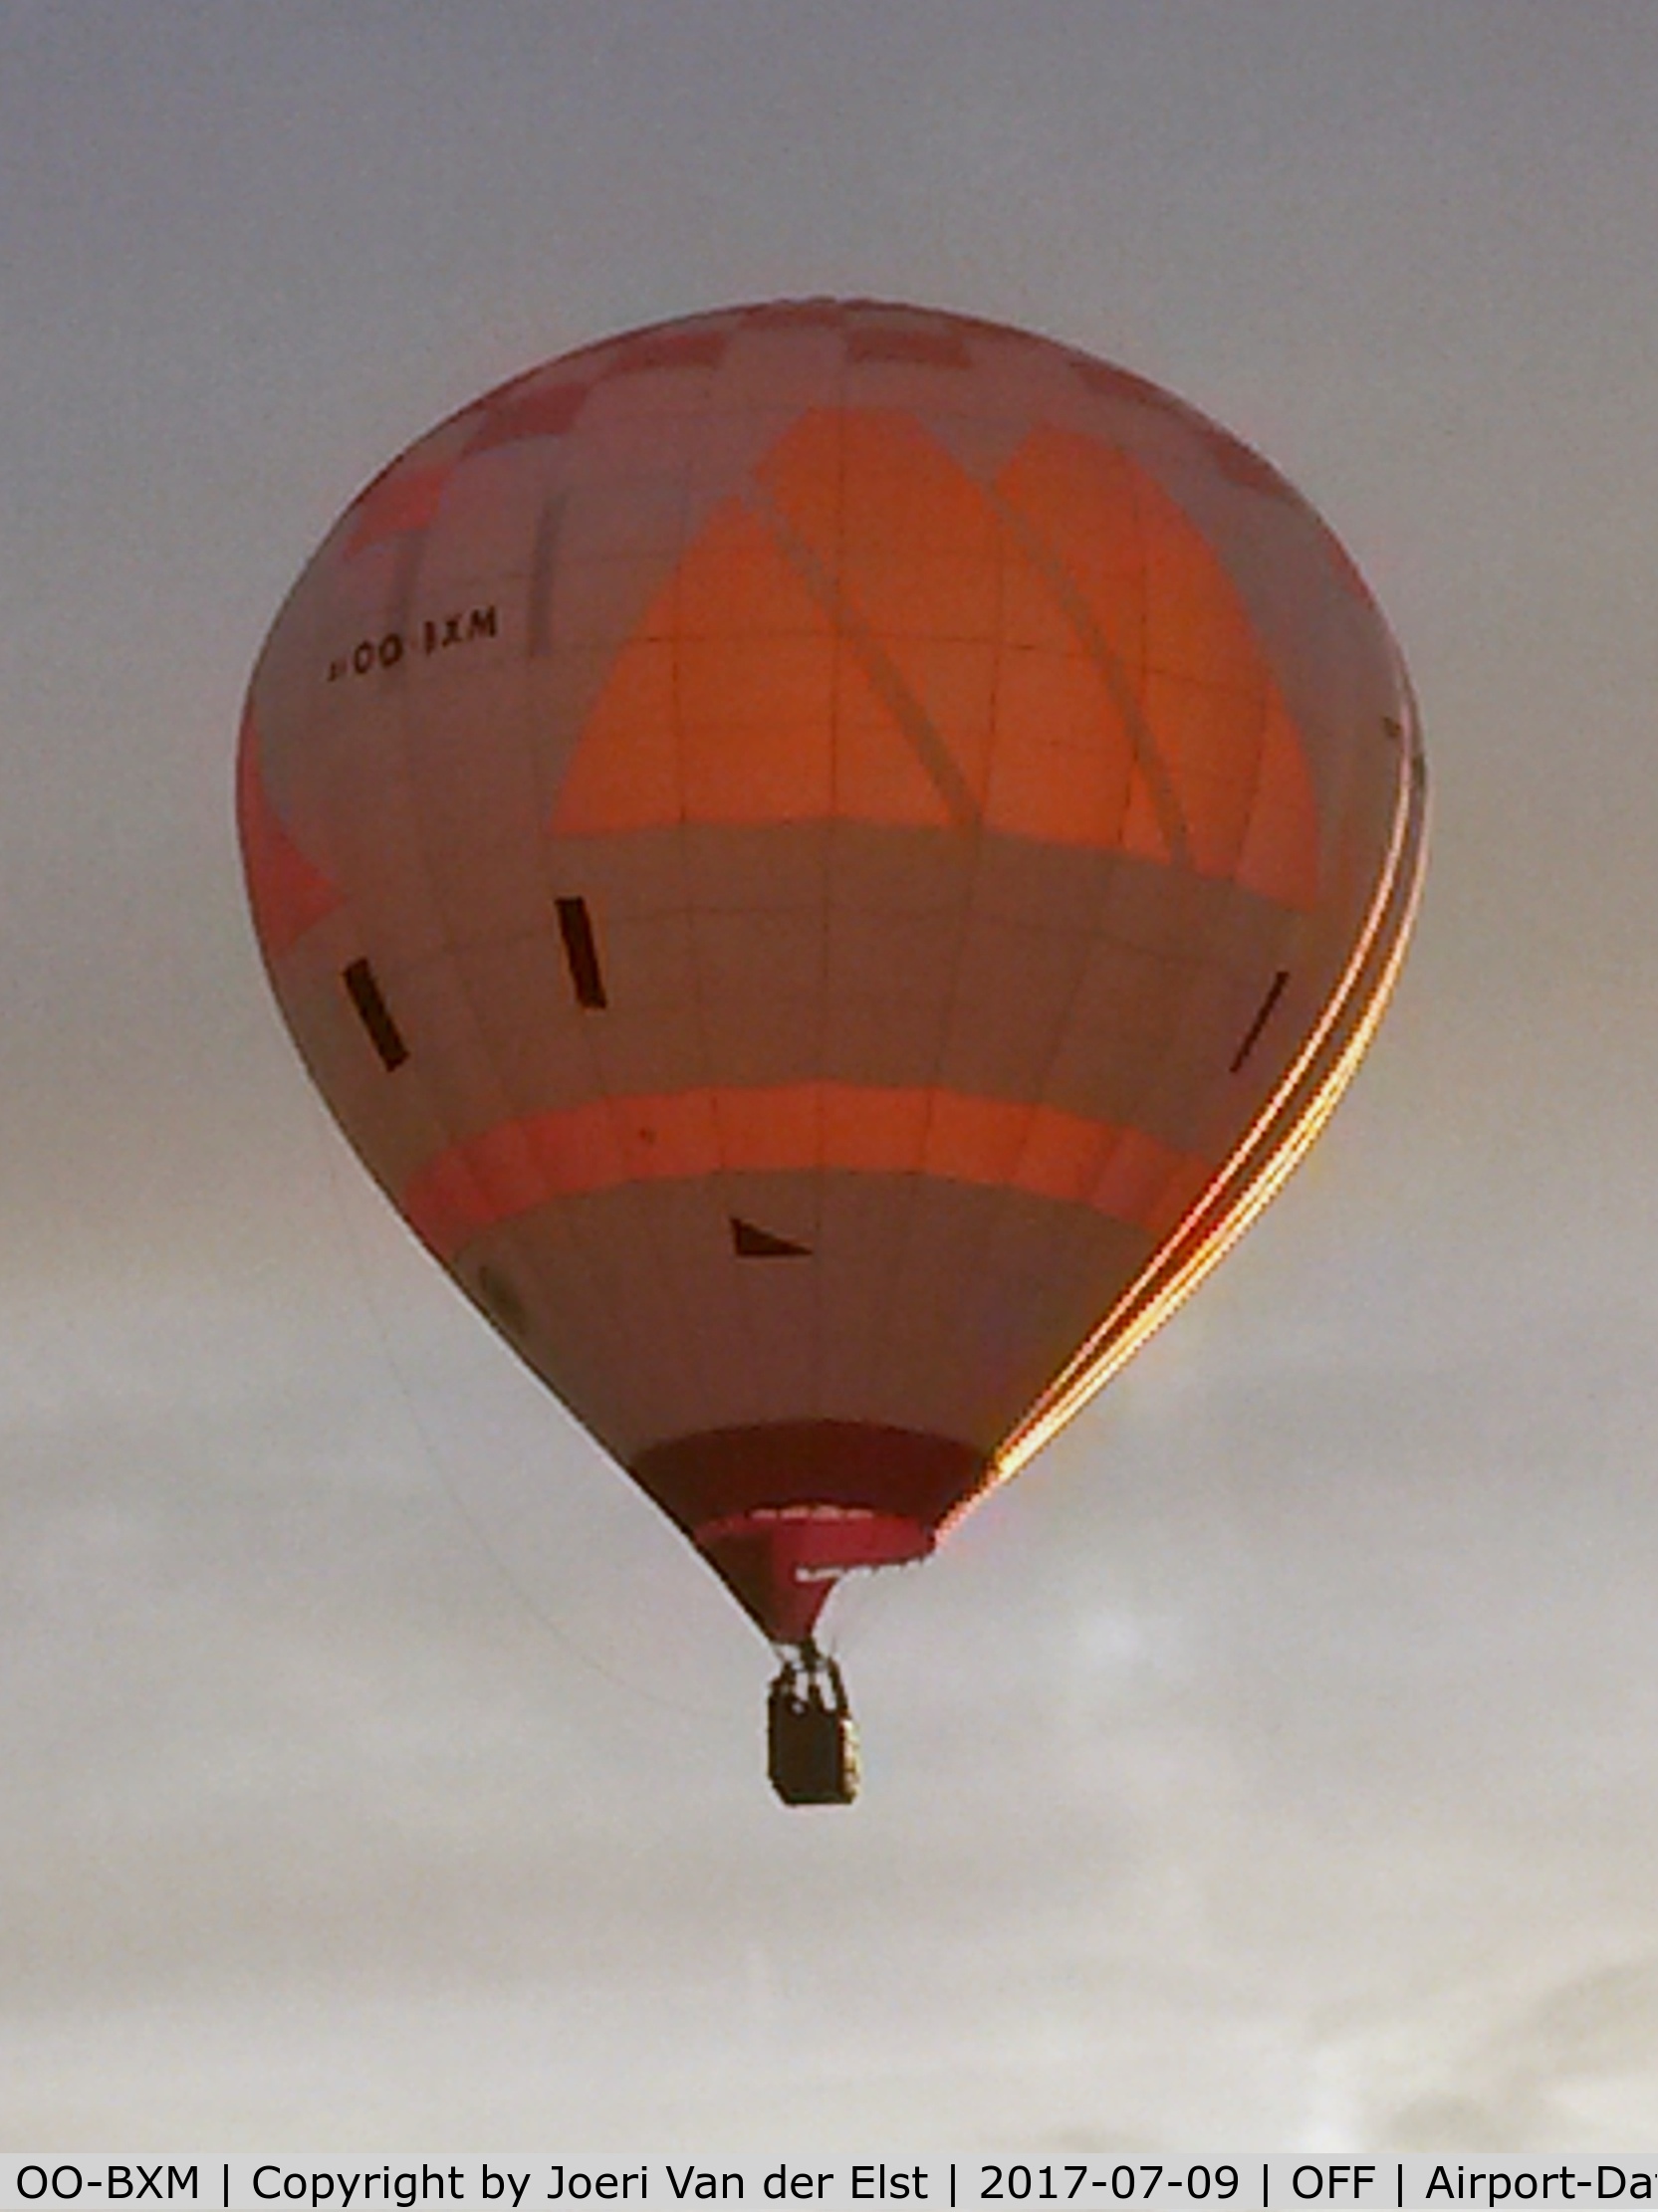 OO-BXM, 2007 Schroeder Fire Balloons G.34/24 C/N 1238, Evening flight, picture taken by An Van der Elst with permission